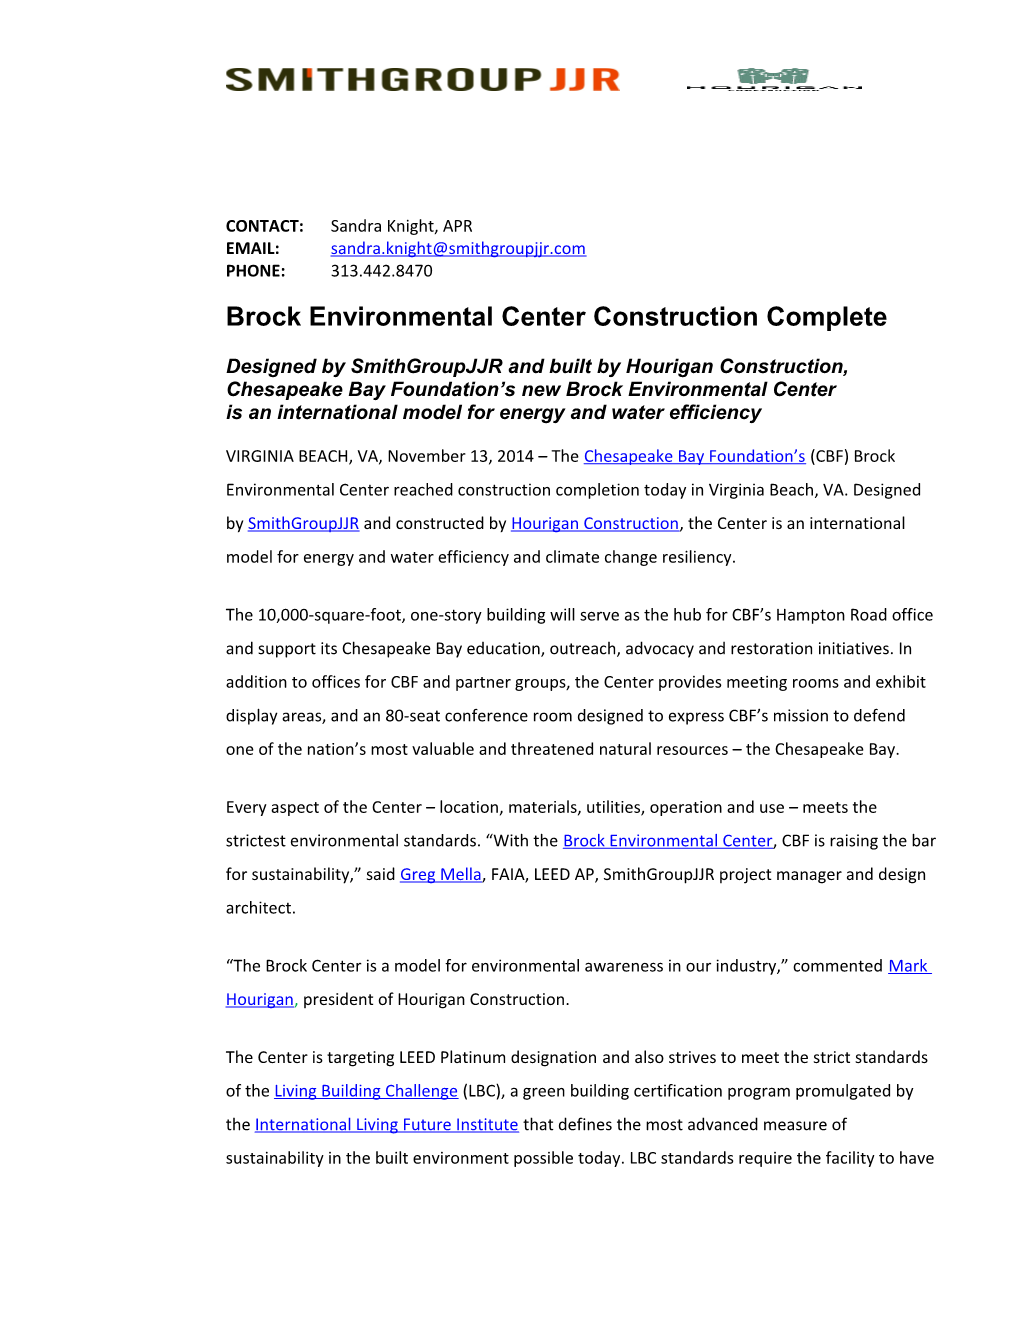 Brock Environmental Center Construction Complete